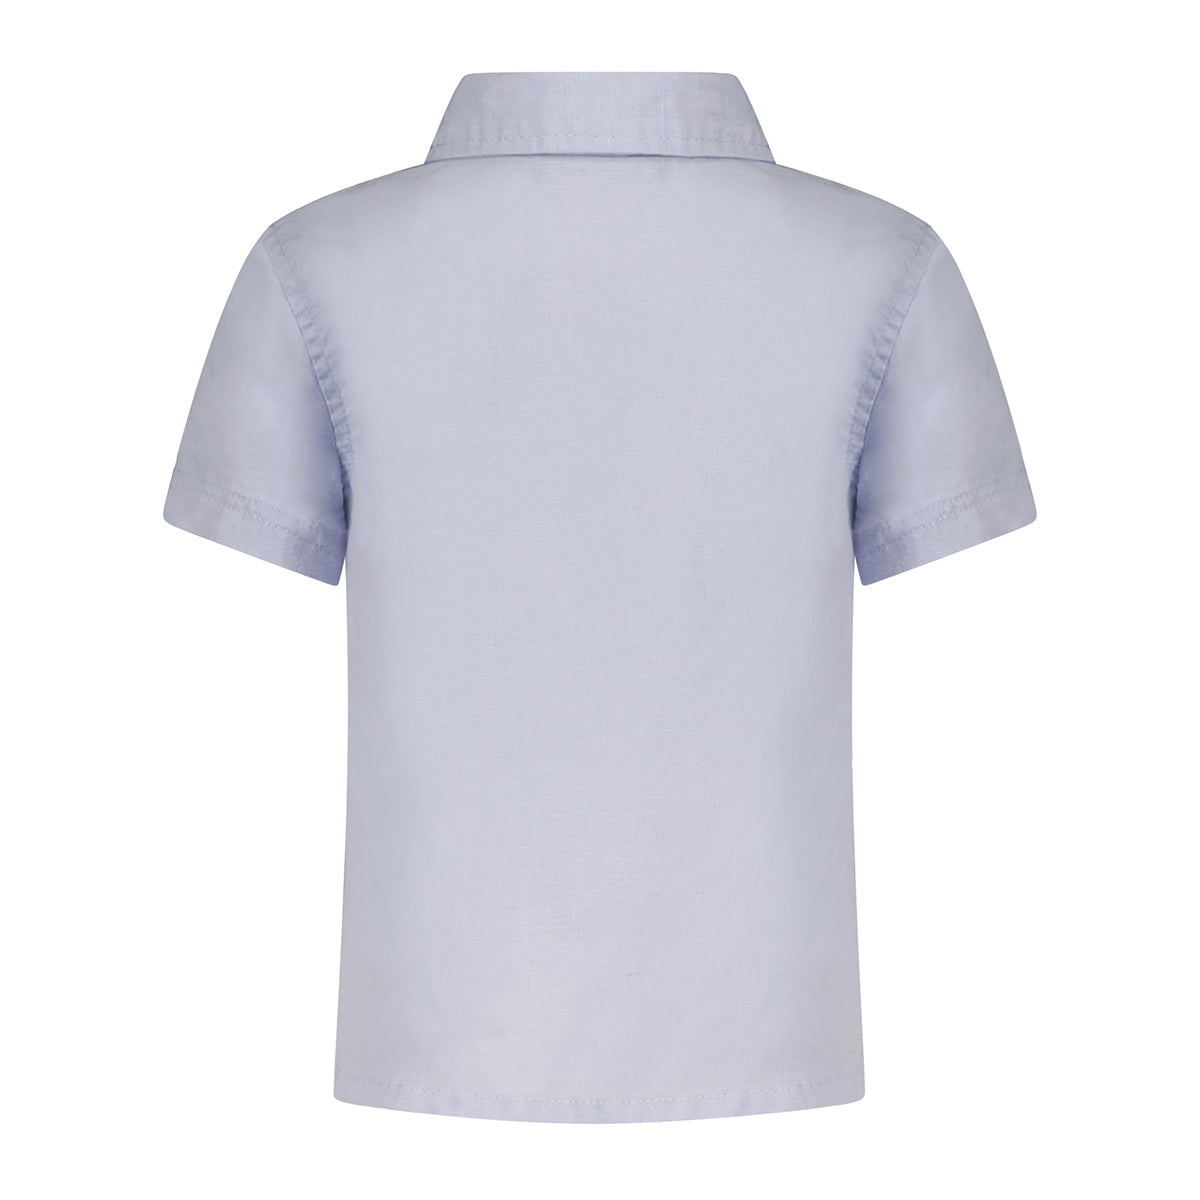 GARÇON baby linen blouse short sleeves